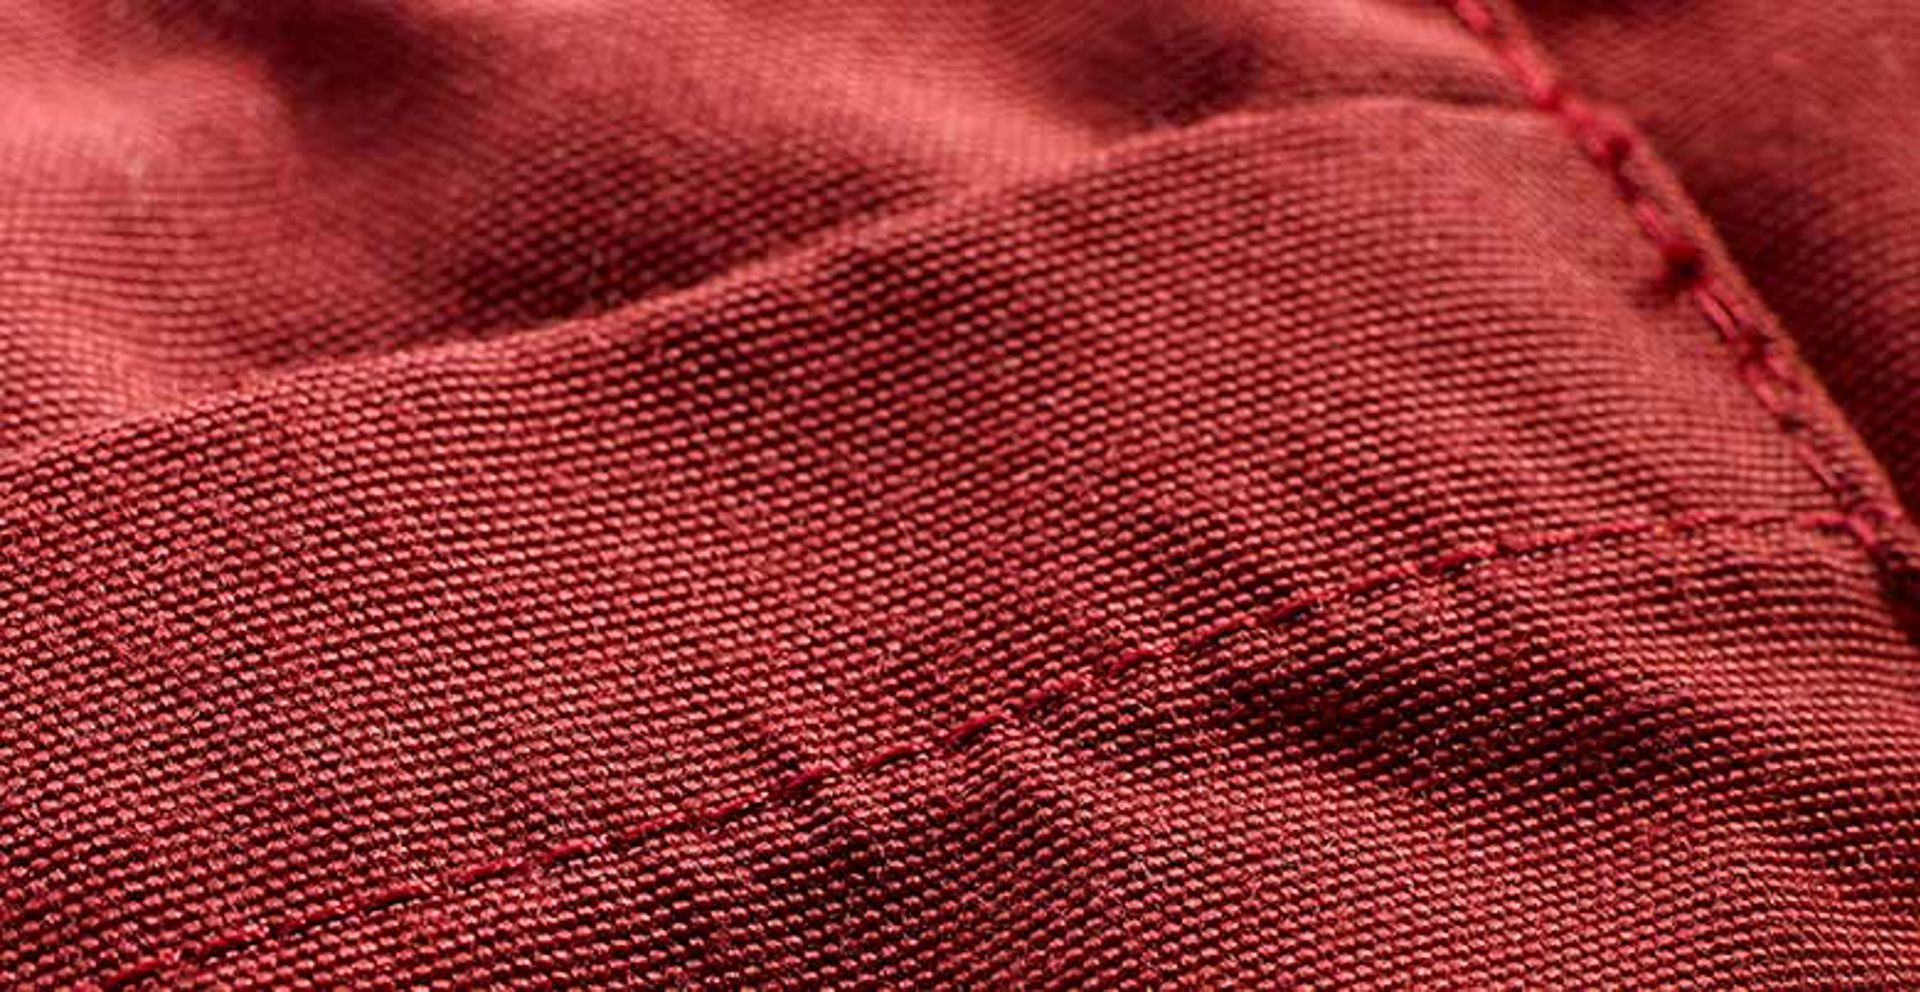 Closeup of stitching on polyester fabric